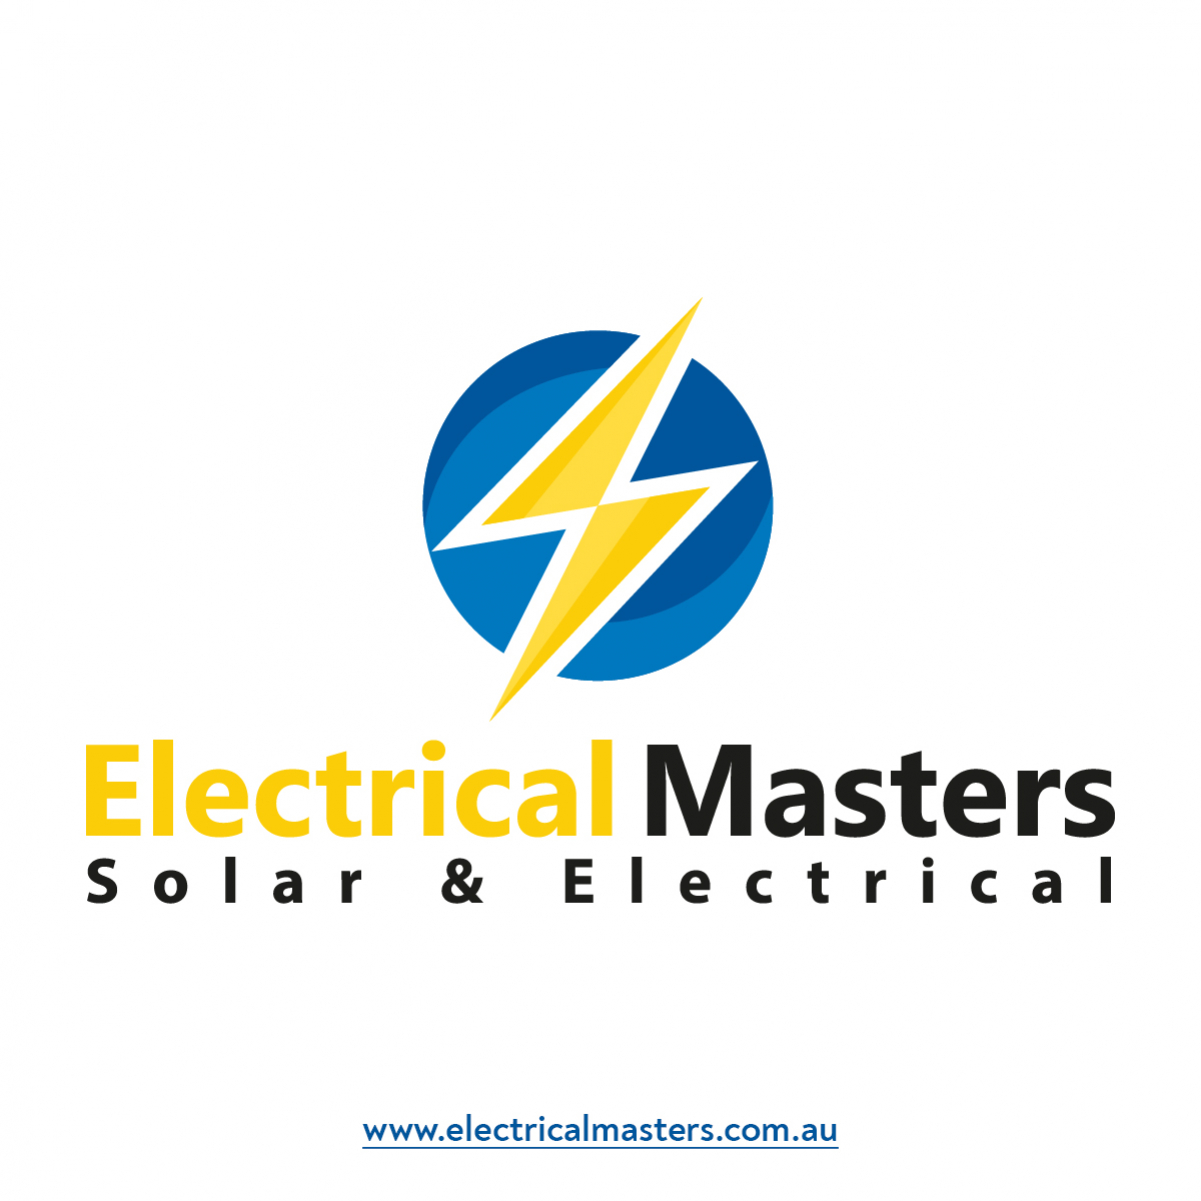 Electricalmasters